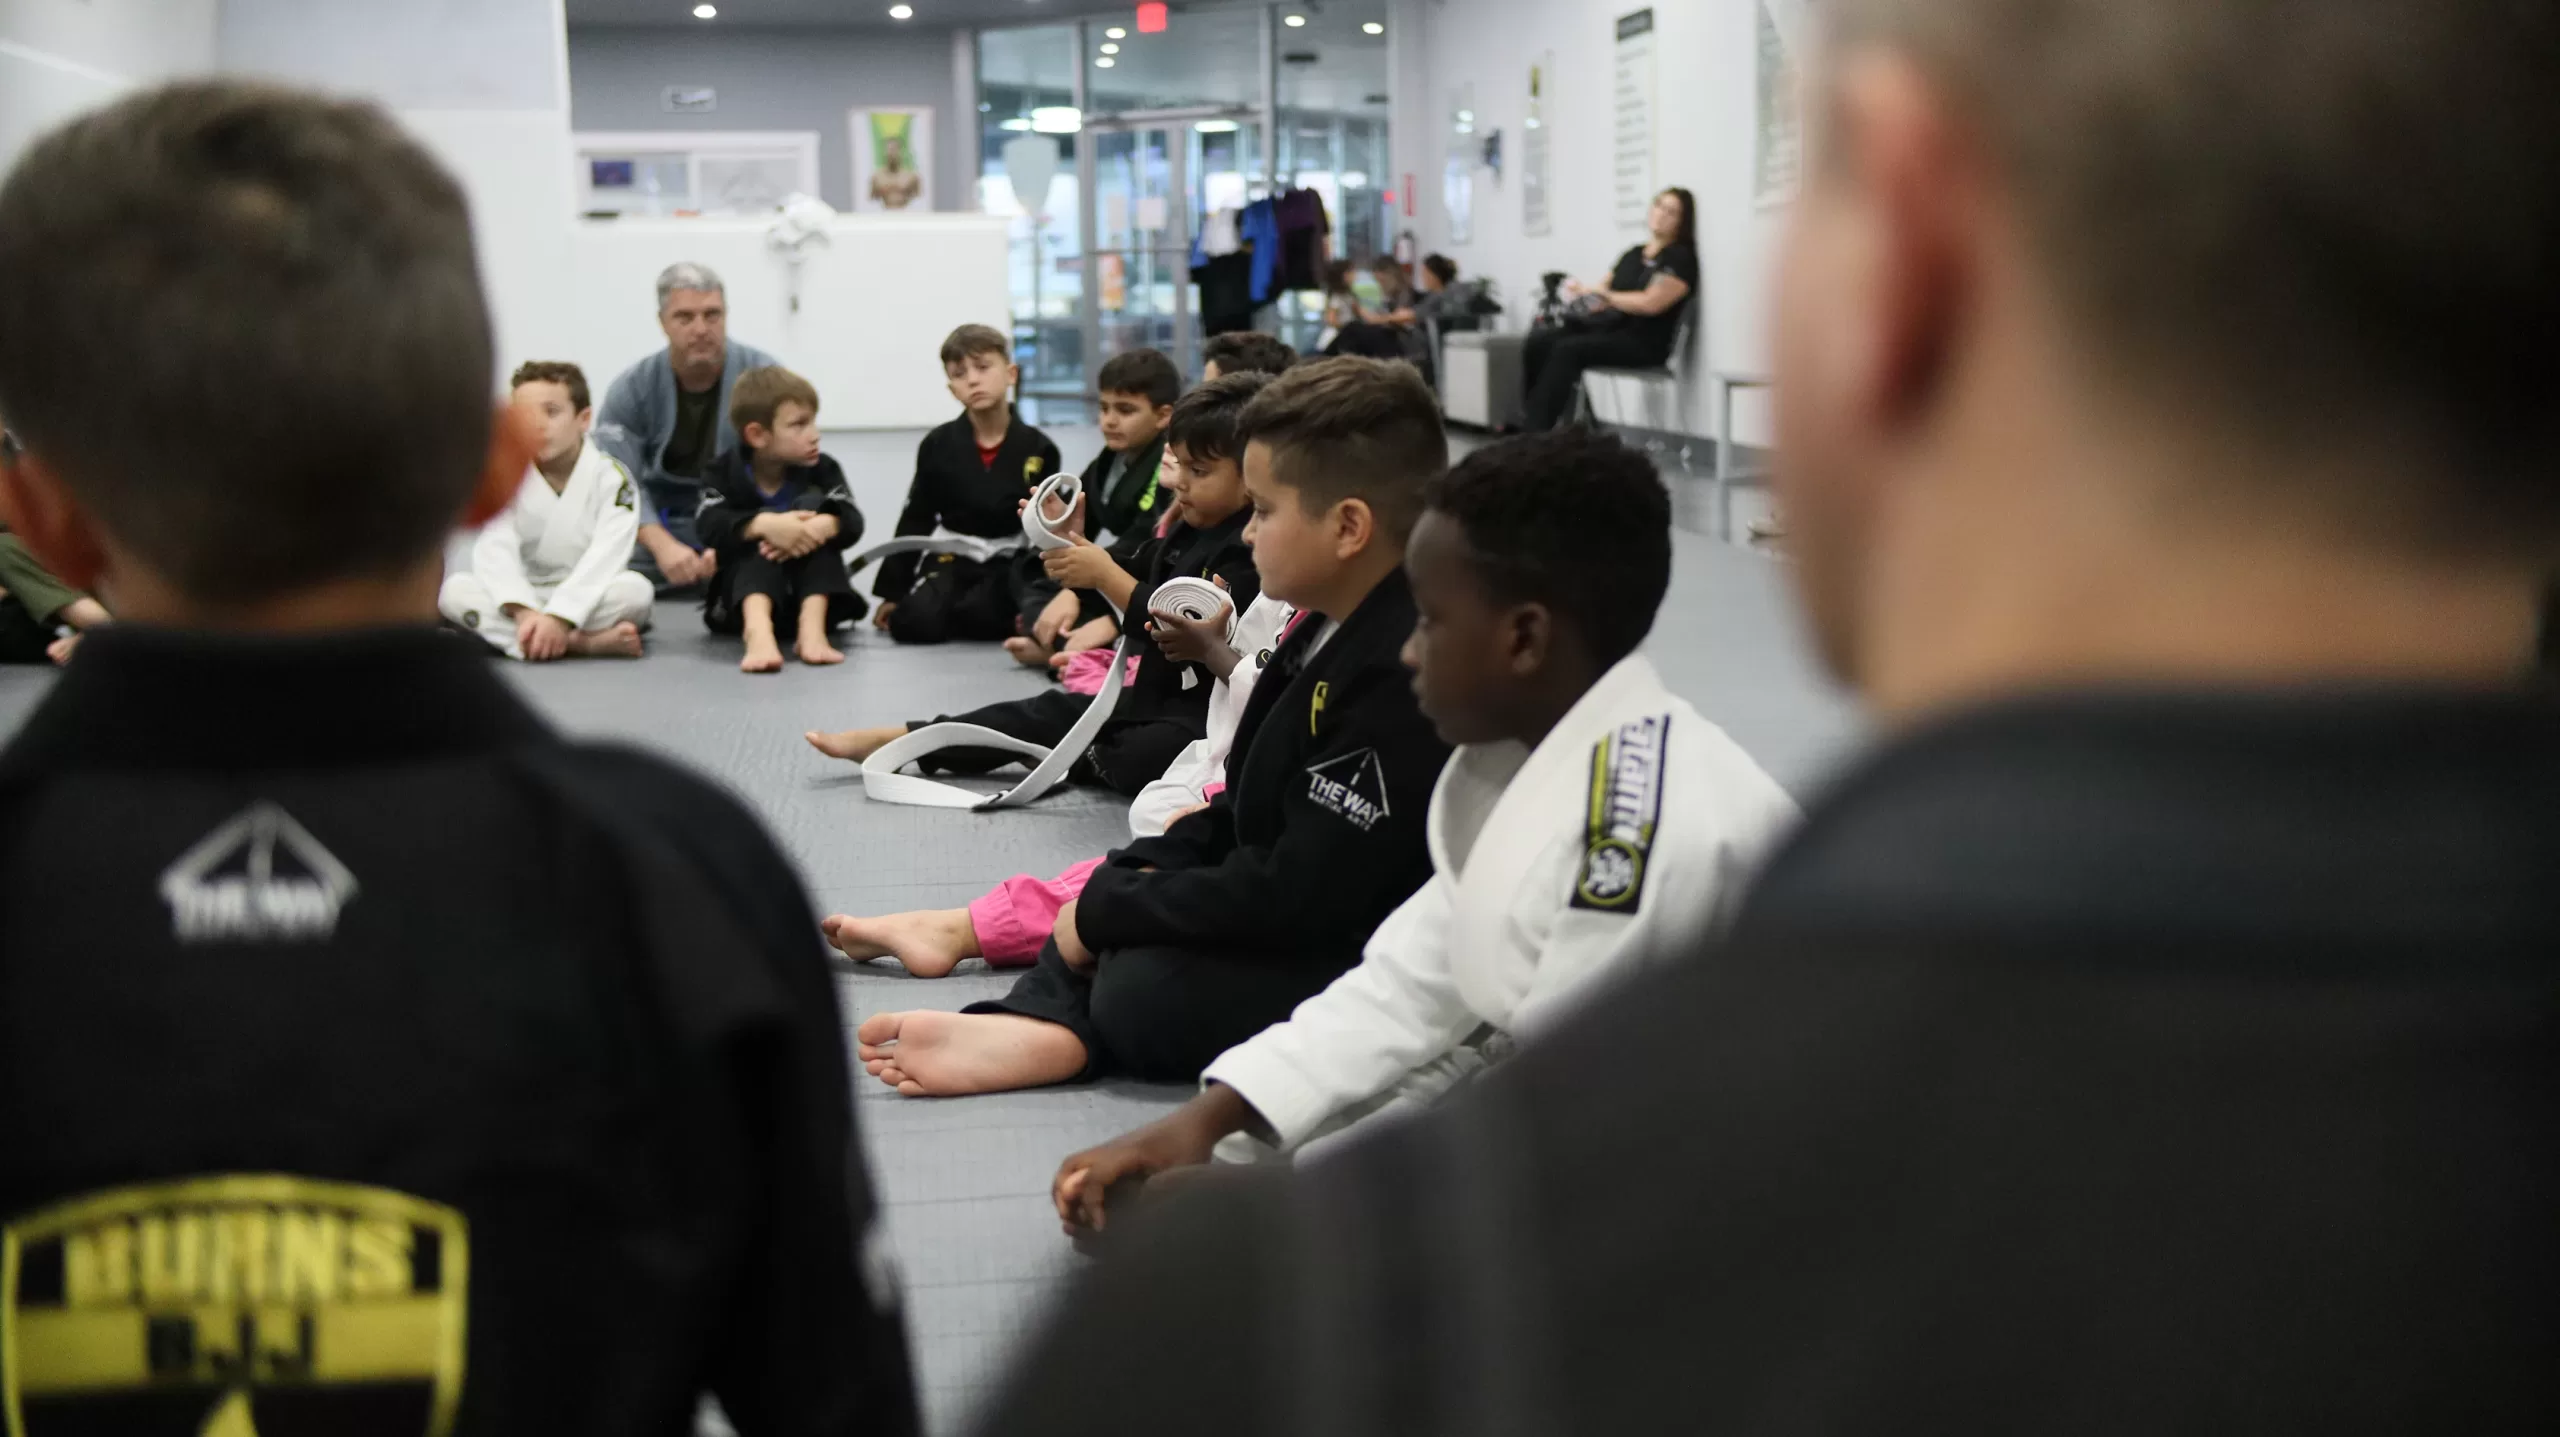 Children participating in a Kids BJJ class at The Way Martial Arts, near Boynton Beach and Palm Beach.